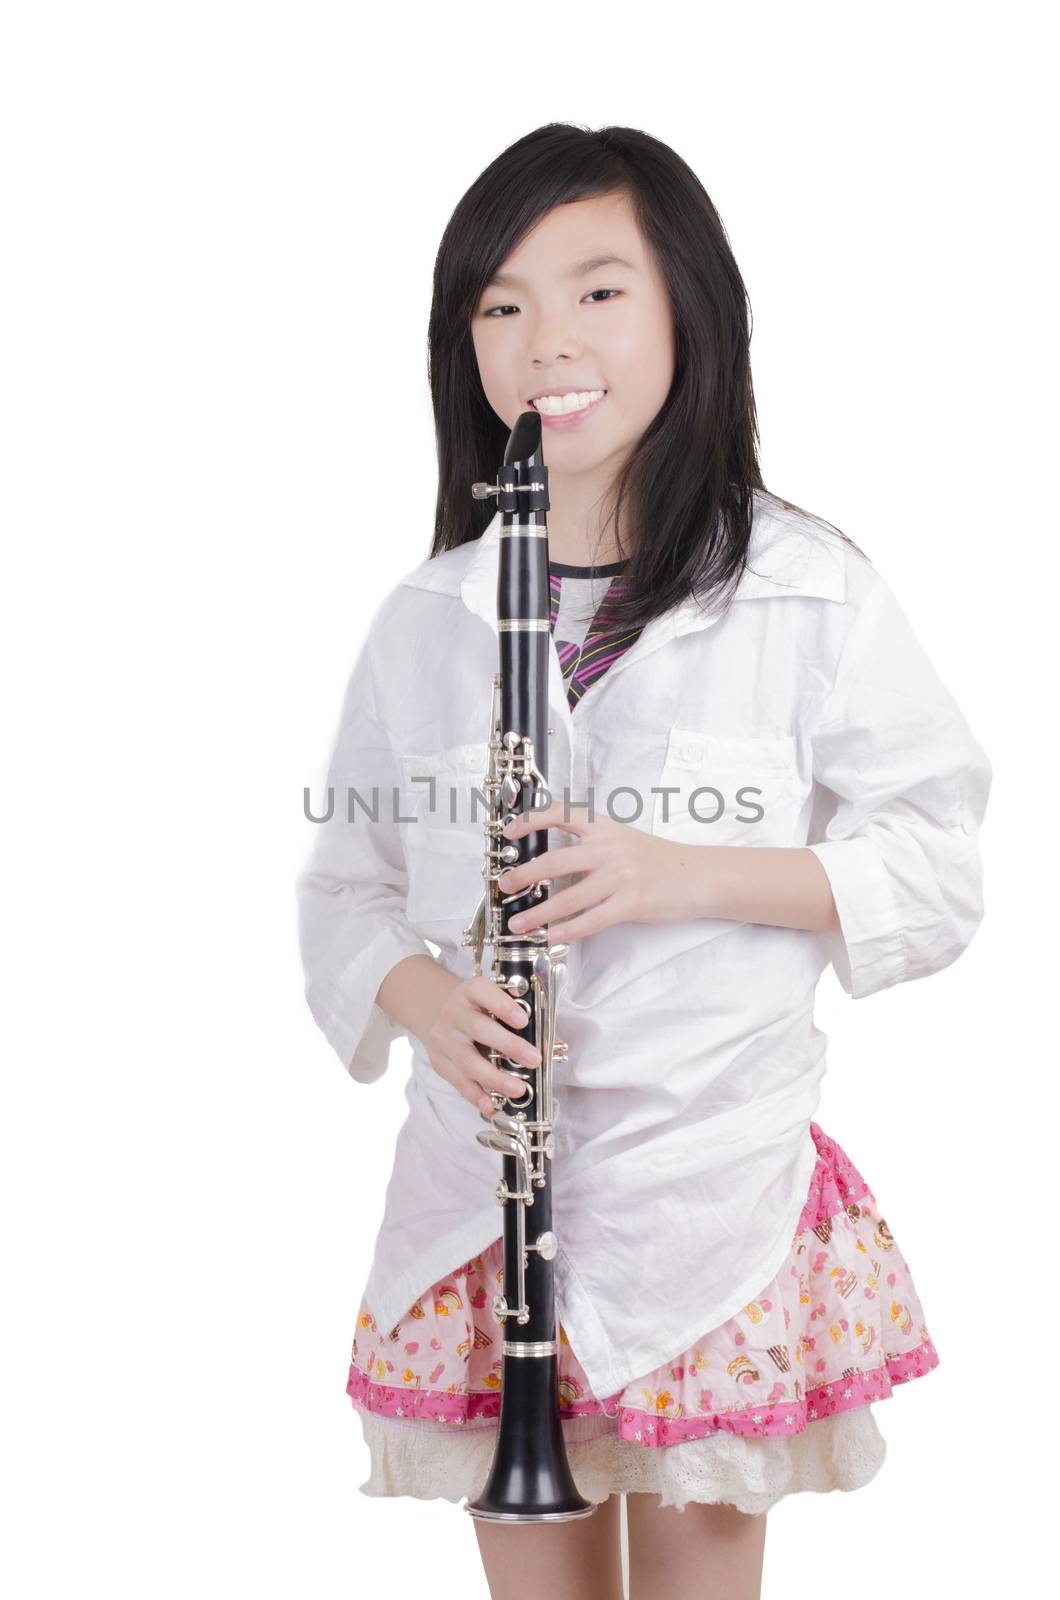 Beauty girl blowing instrument by FrankyLiu